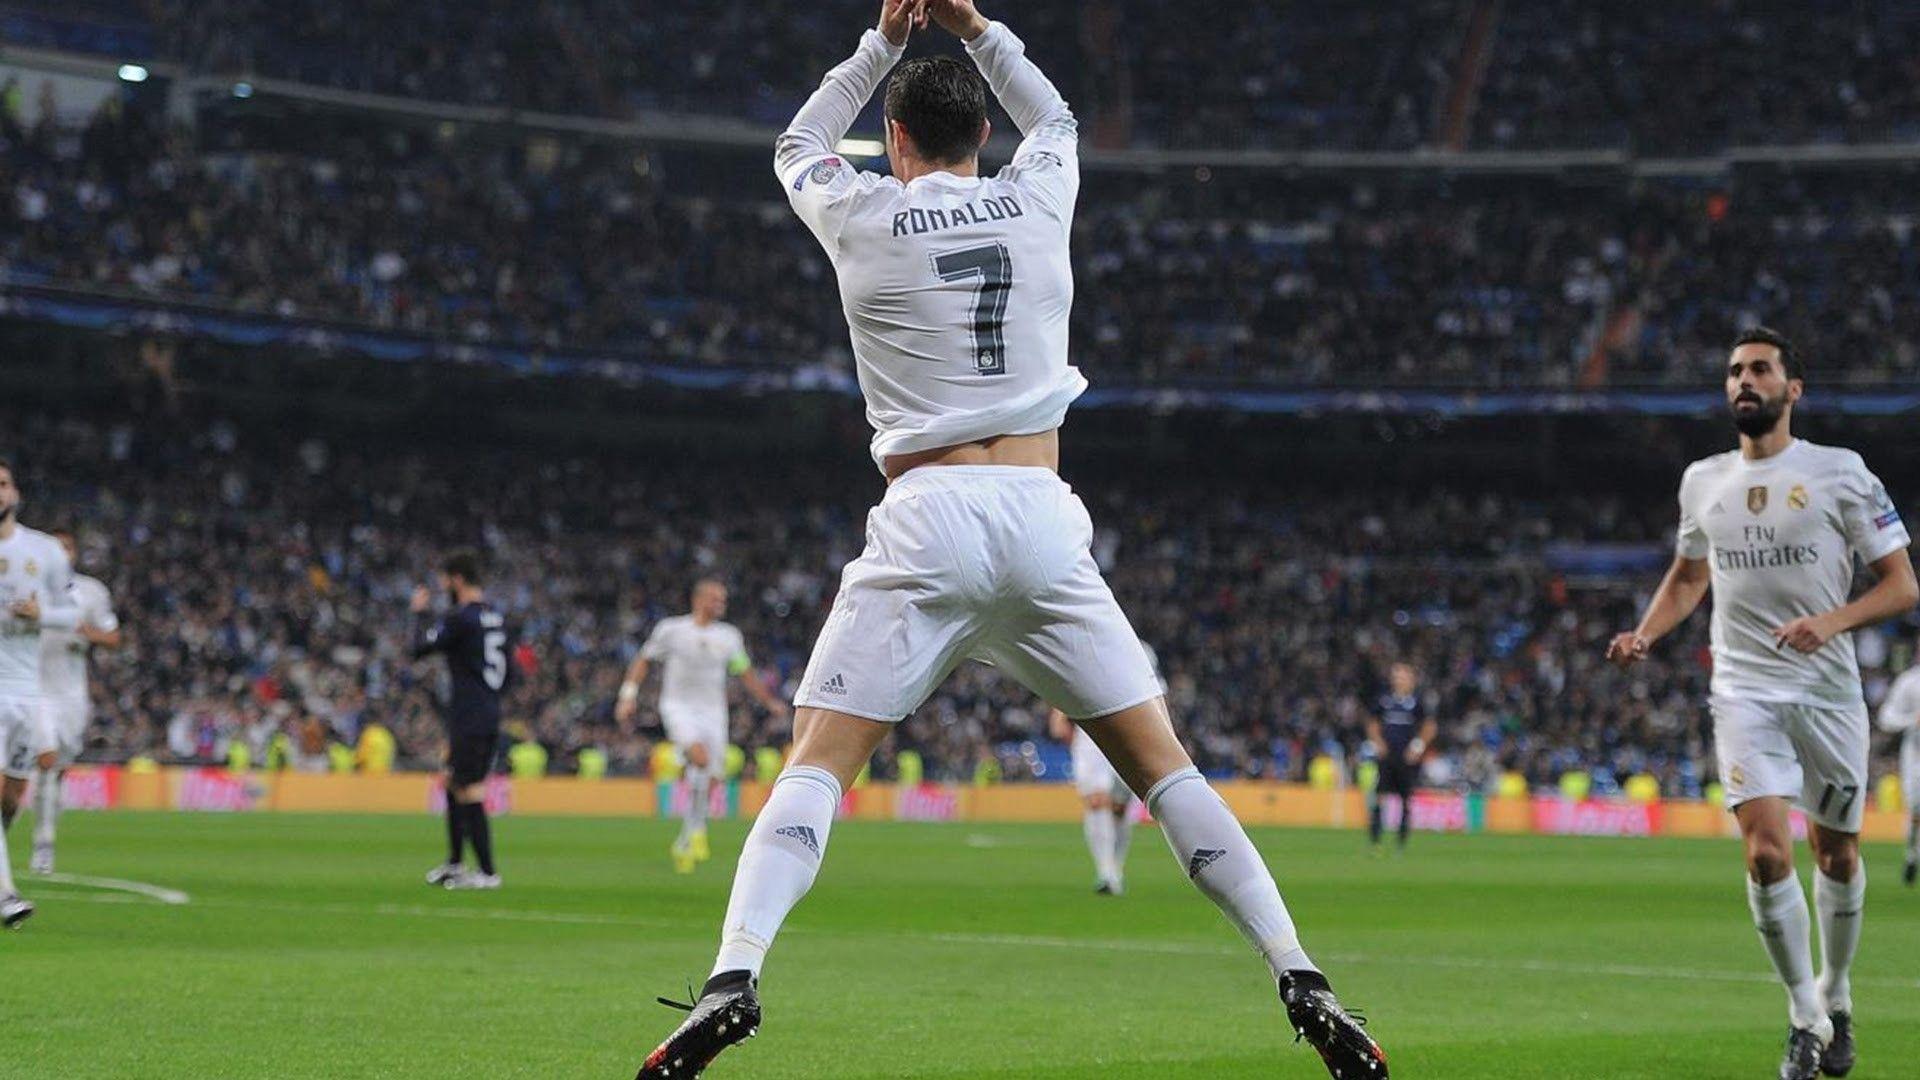 Ronaldo Live Wallpaper on iPhone  Ronaldo siuuu Wallpaper on iPhone    YouTube